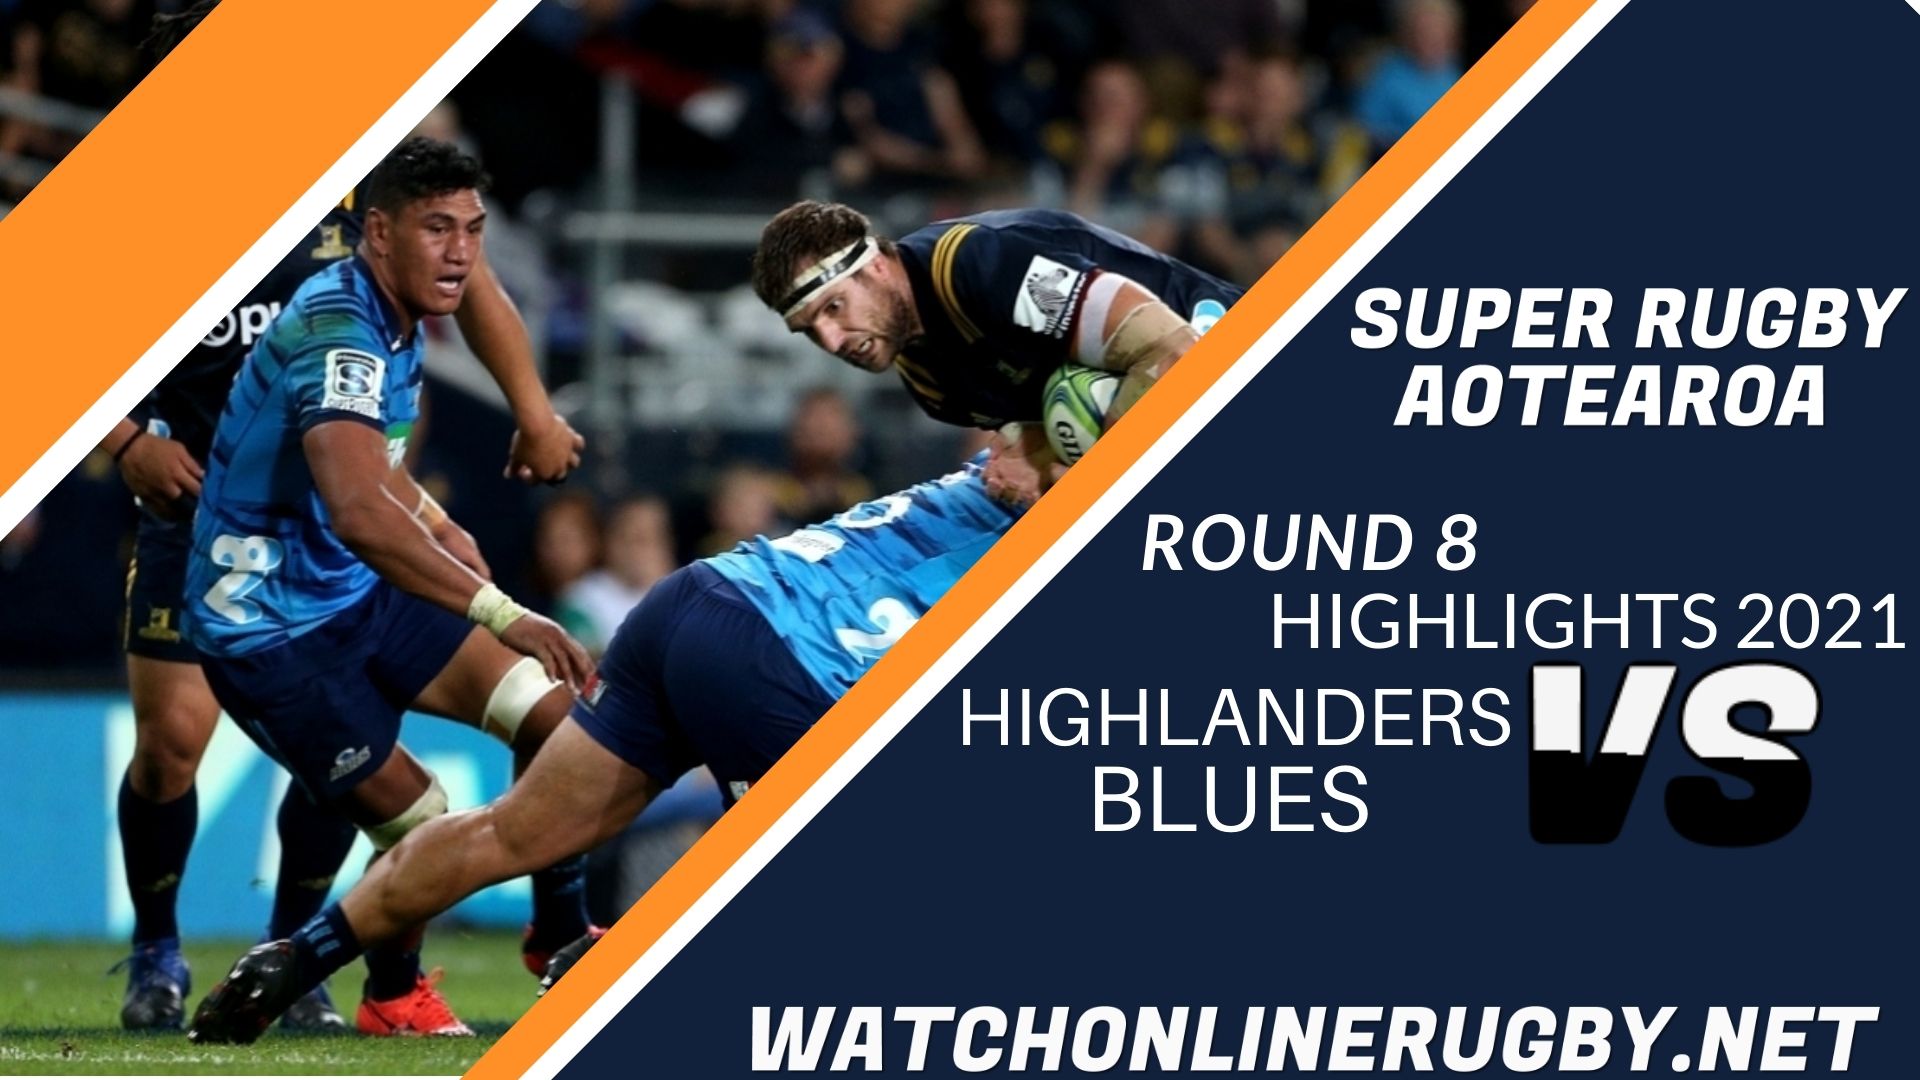 Highlanders Vs Blues Super Rugby Aotearoa 2021 RD 8